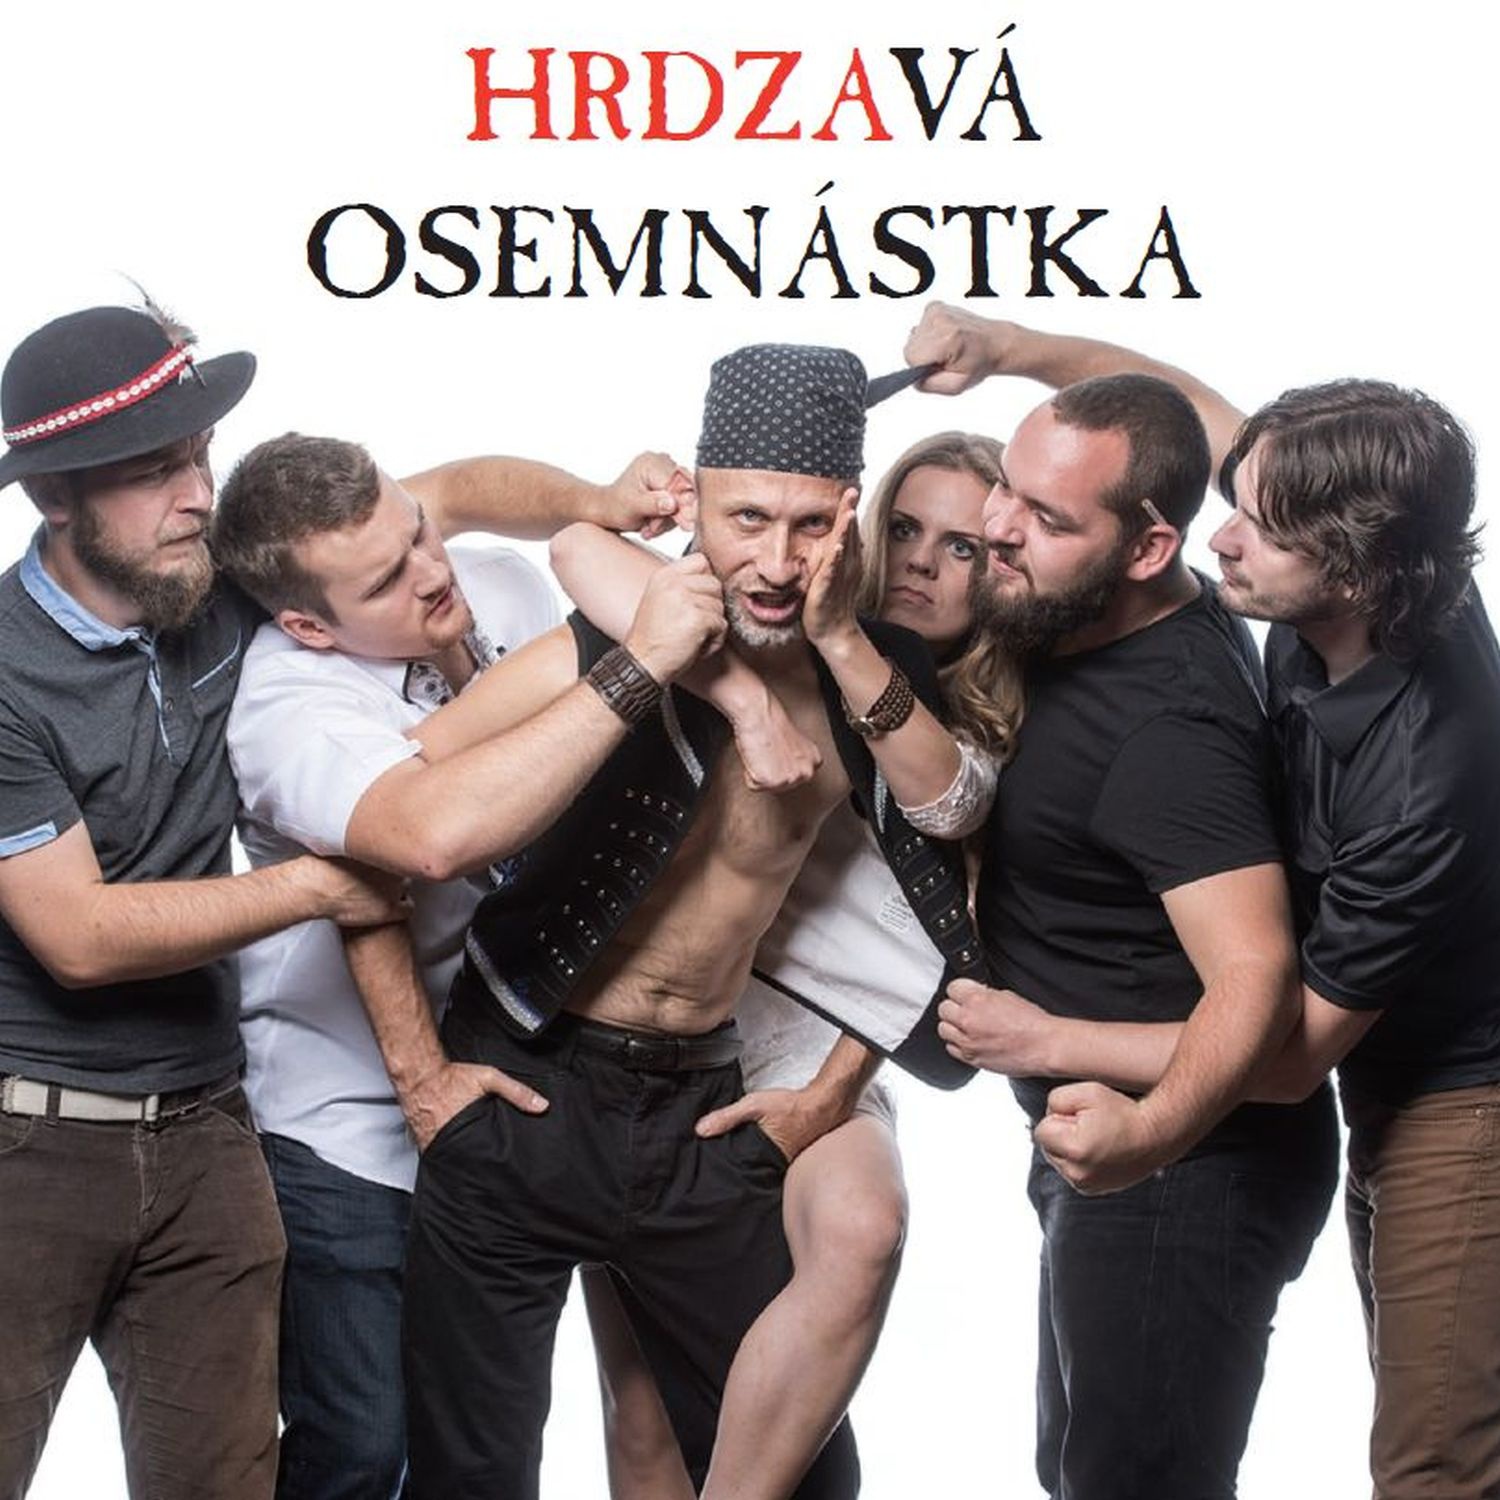 CD Shop - HRDZA HRDZAVA OSEMNASTKA